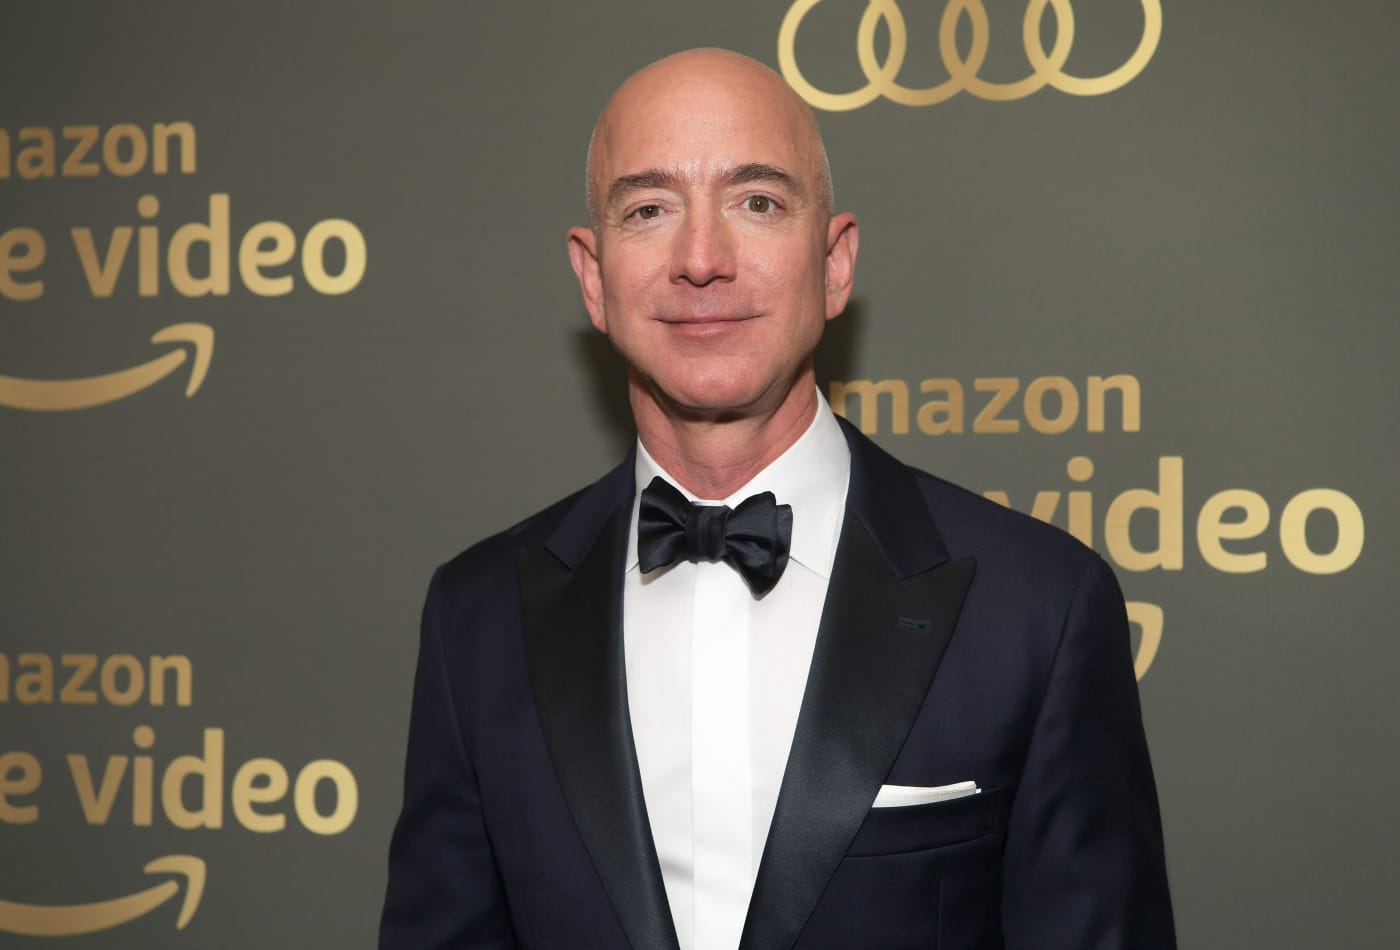 Amazon CEO Jeff Bezos' secrets to success